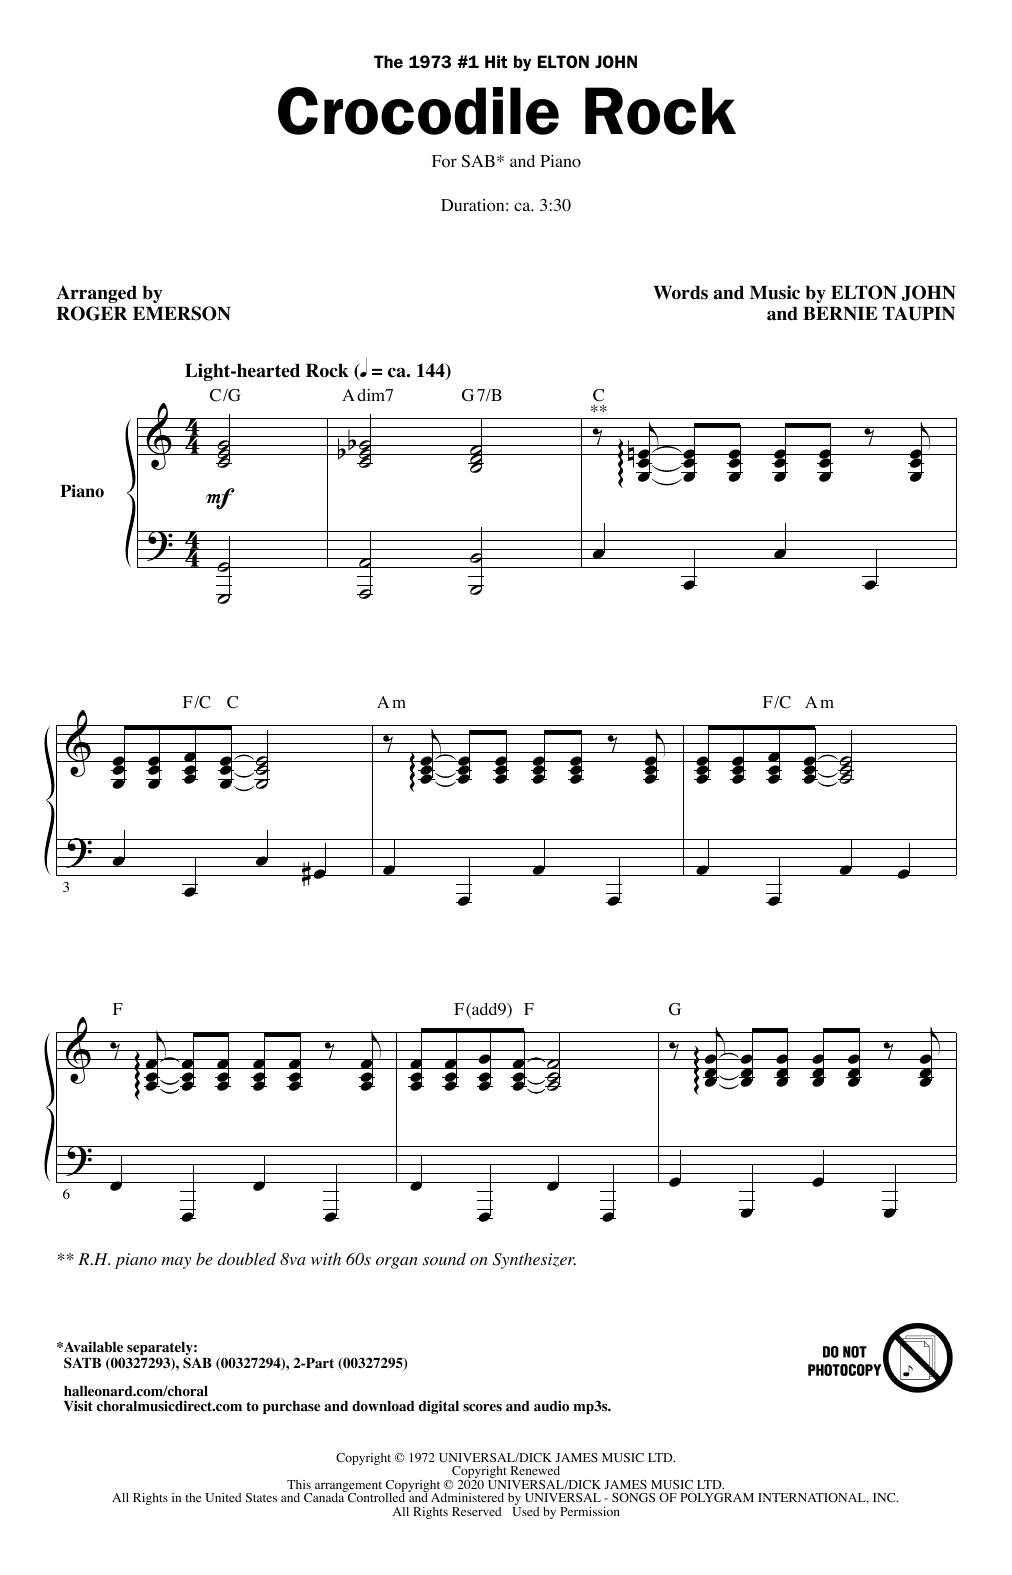 Elton John Crocodile Rock (arr. Roger Emerson) Sheet Music Notes & Chords for SAB Choir - Download or Print PDF